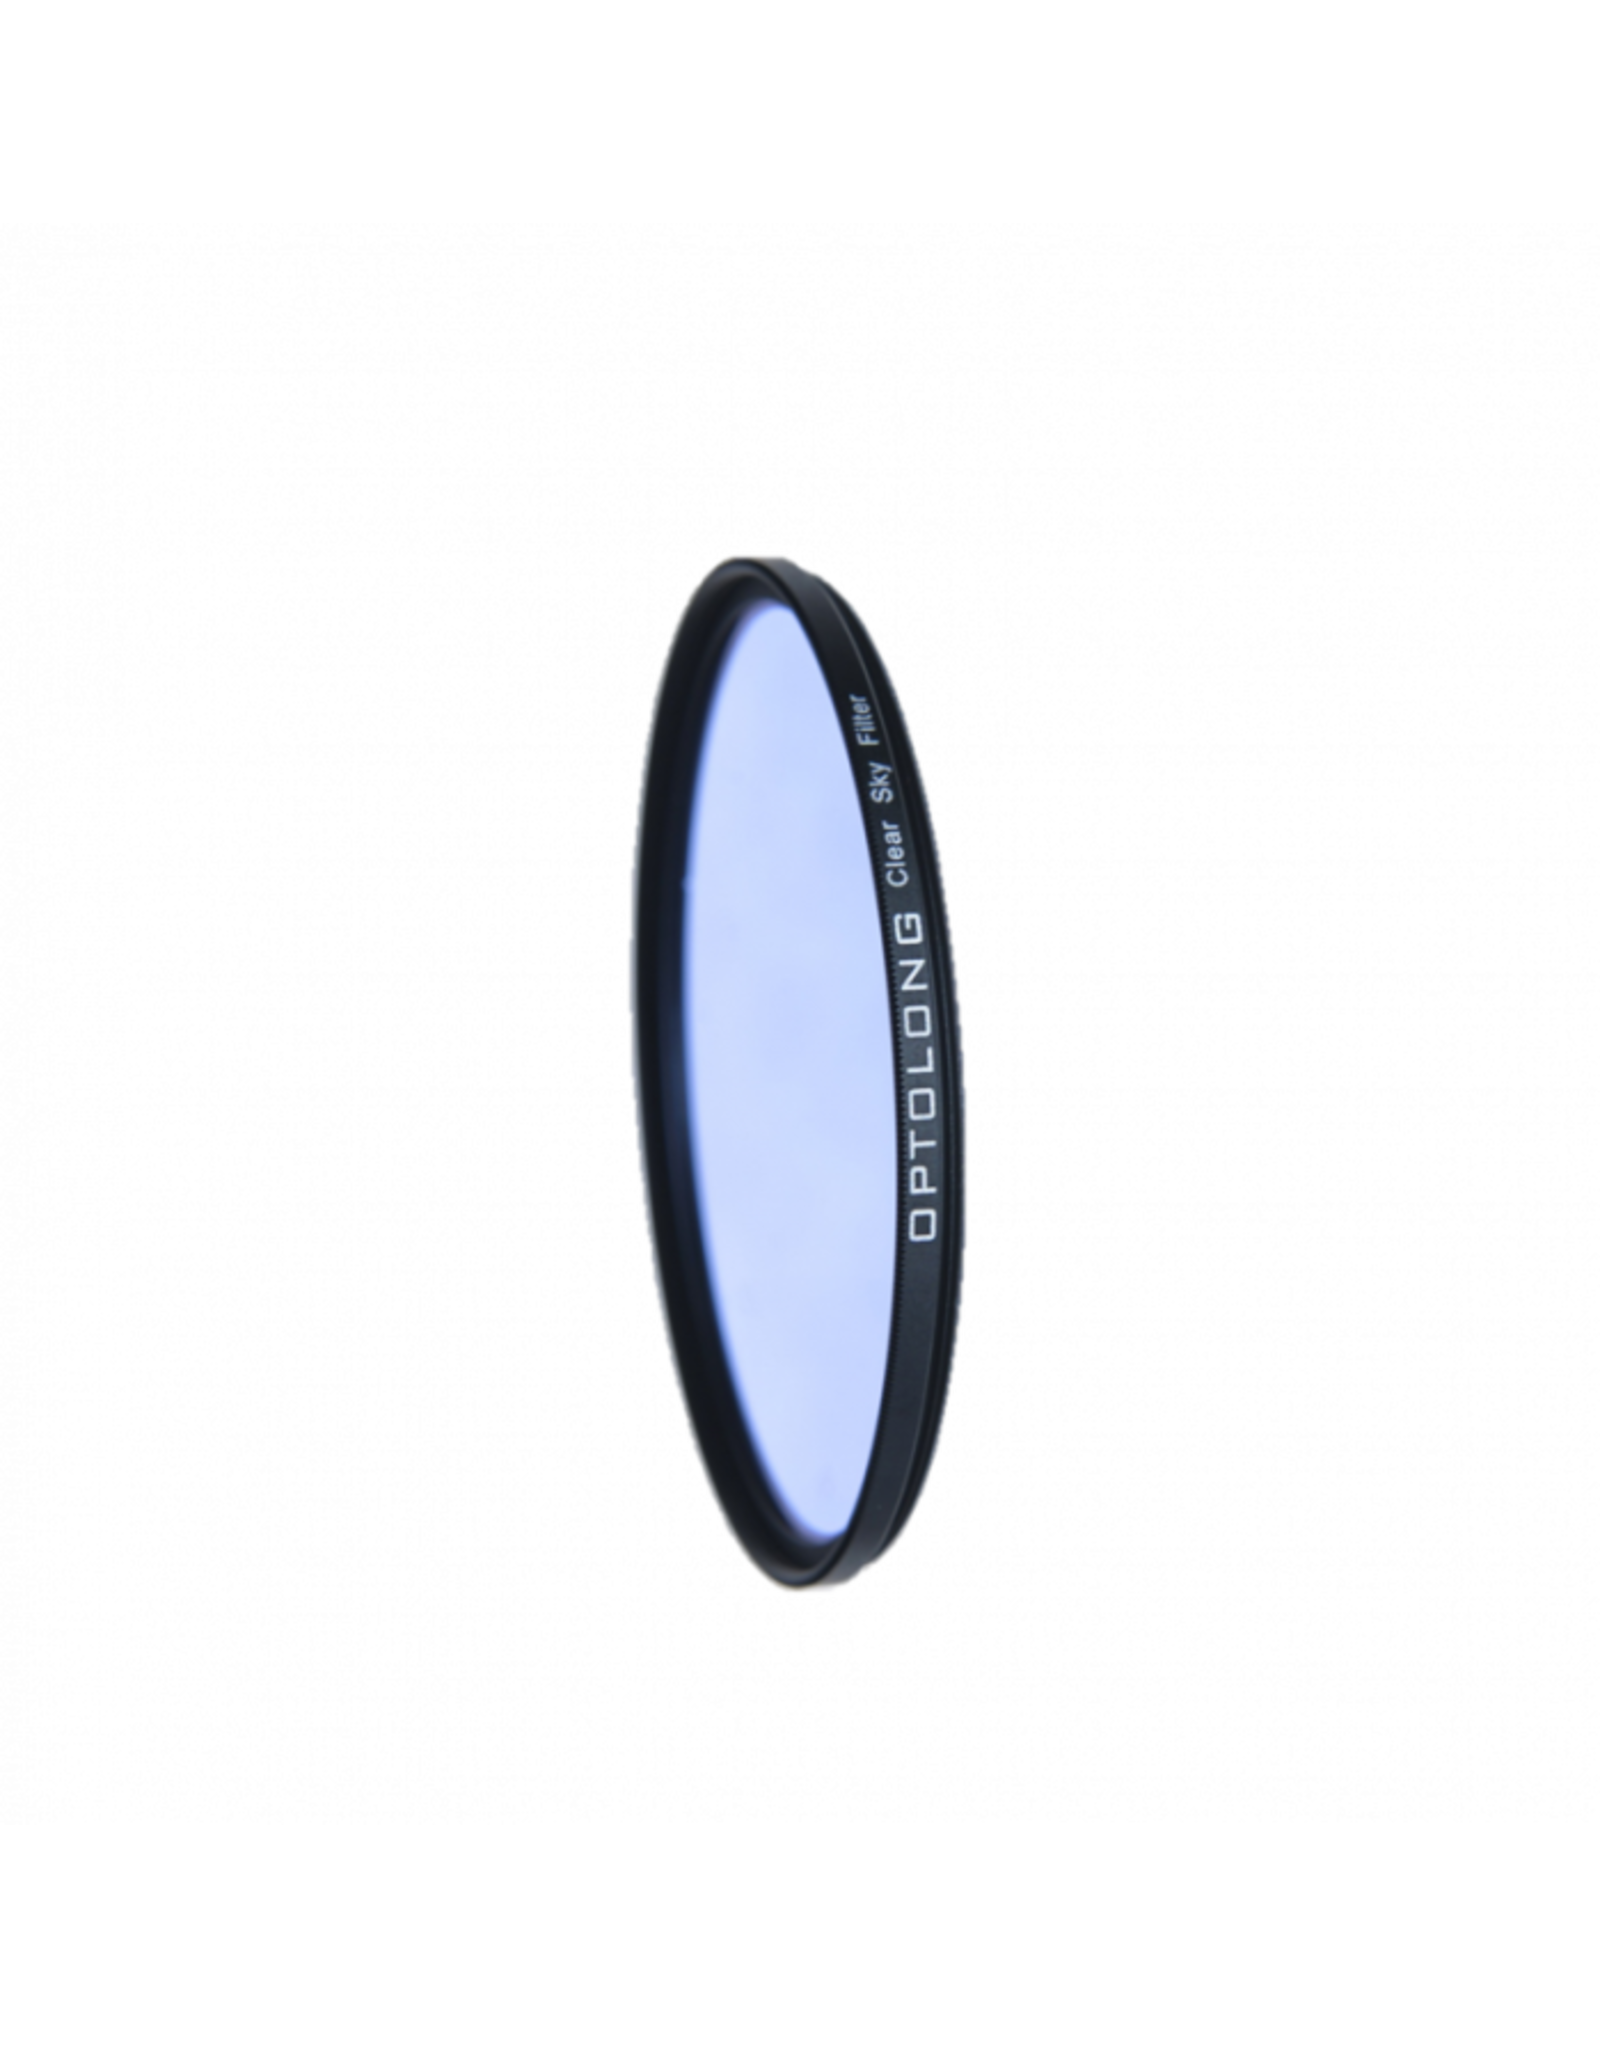 Optolong Optolong UBVRI Filter Set - 1.25" Mounted - UBVRI-125